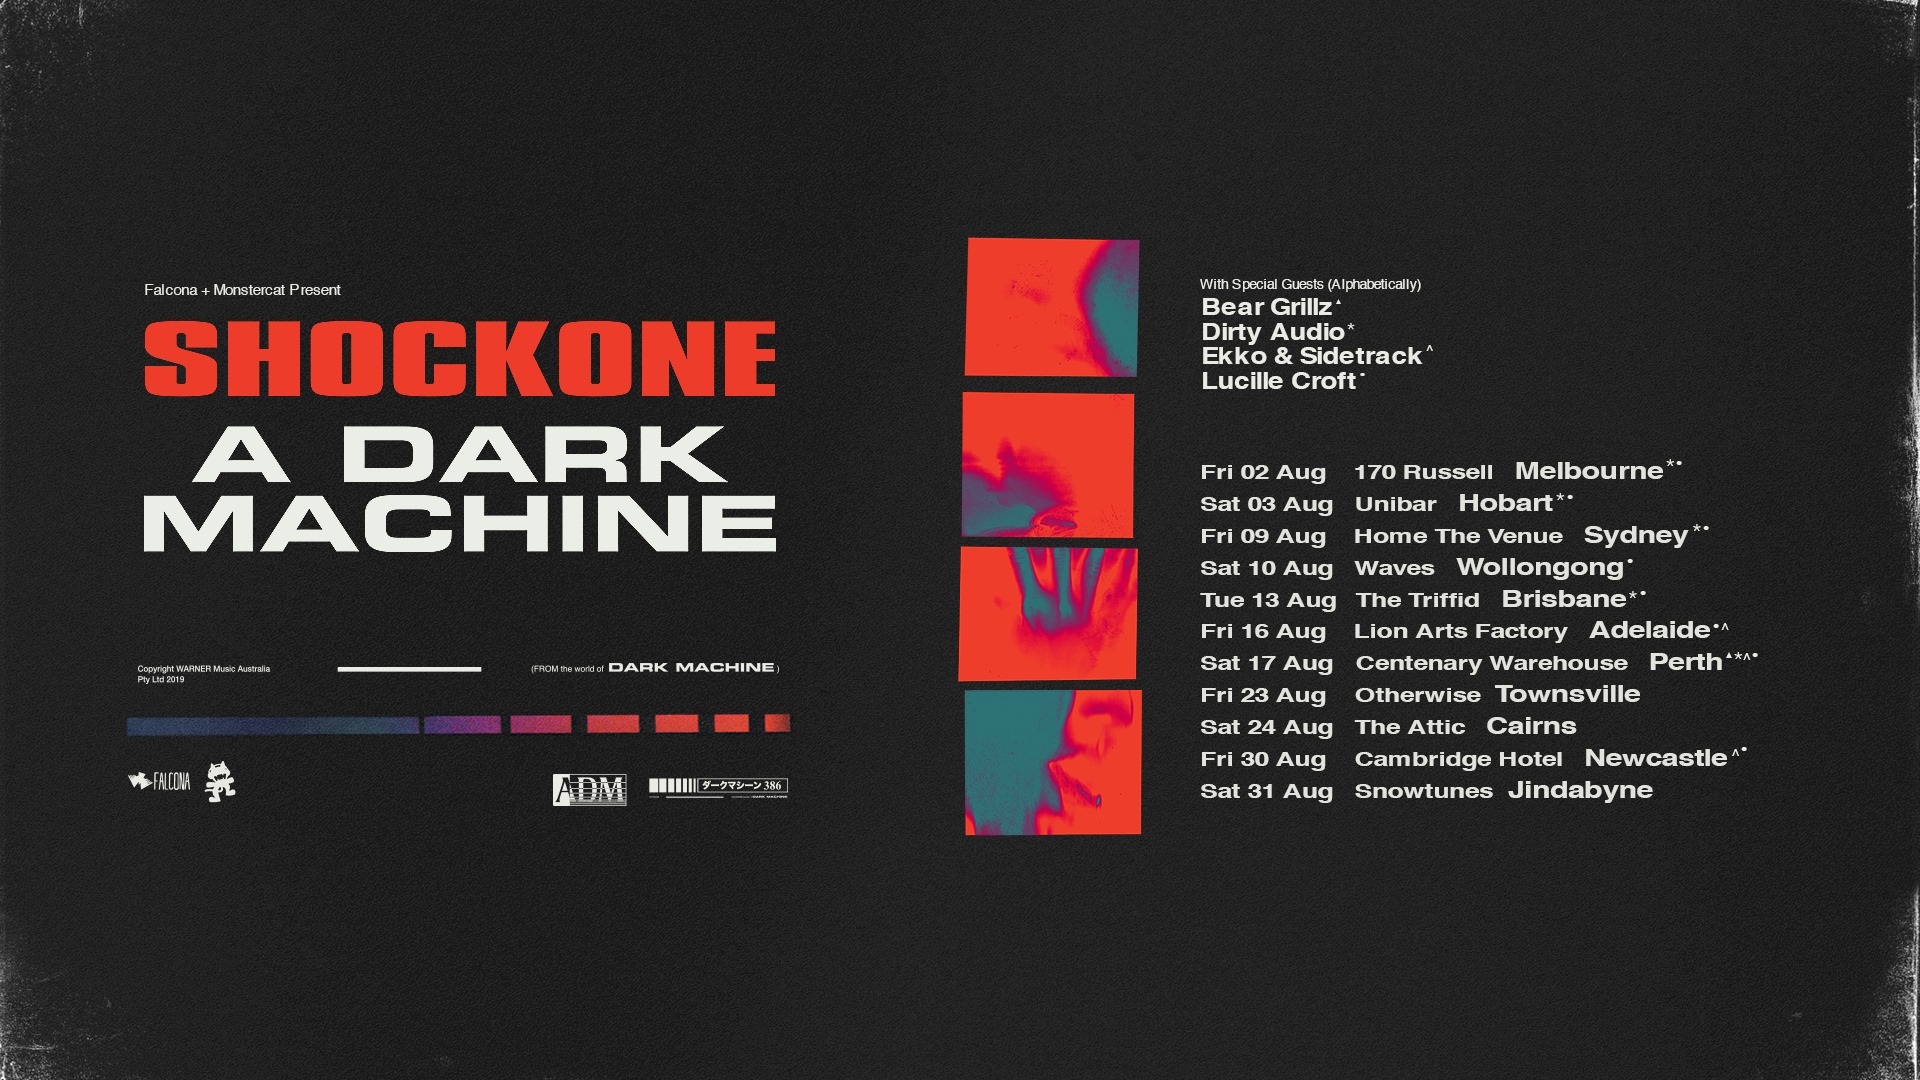 shockone-a-dark-machine-australian-tour-oz-edm-2019